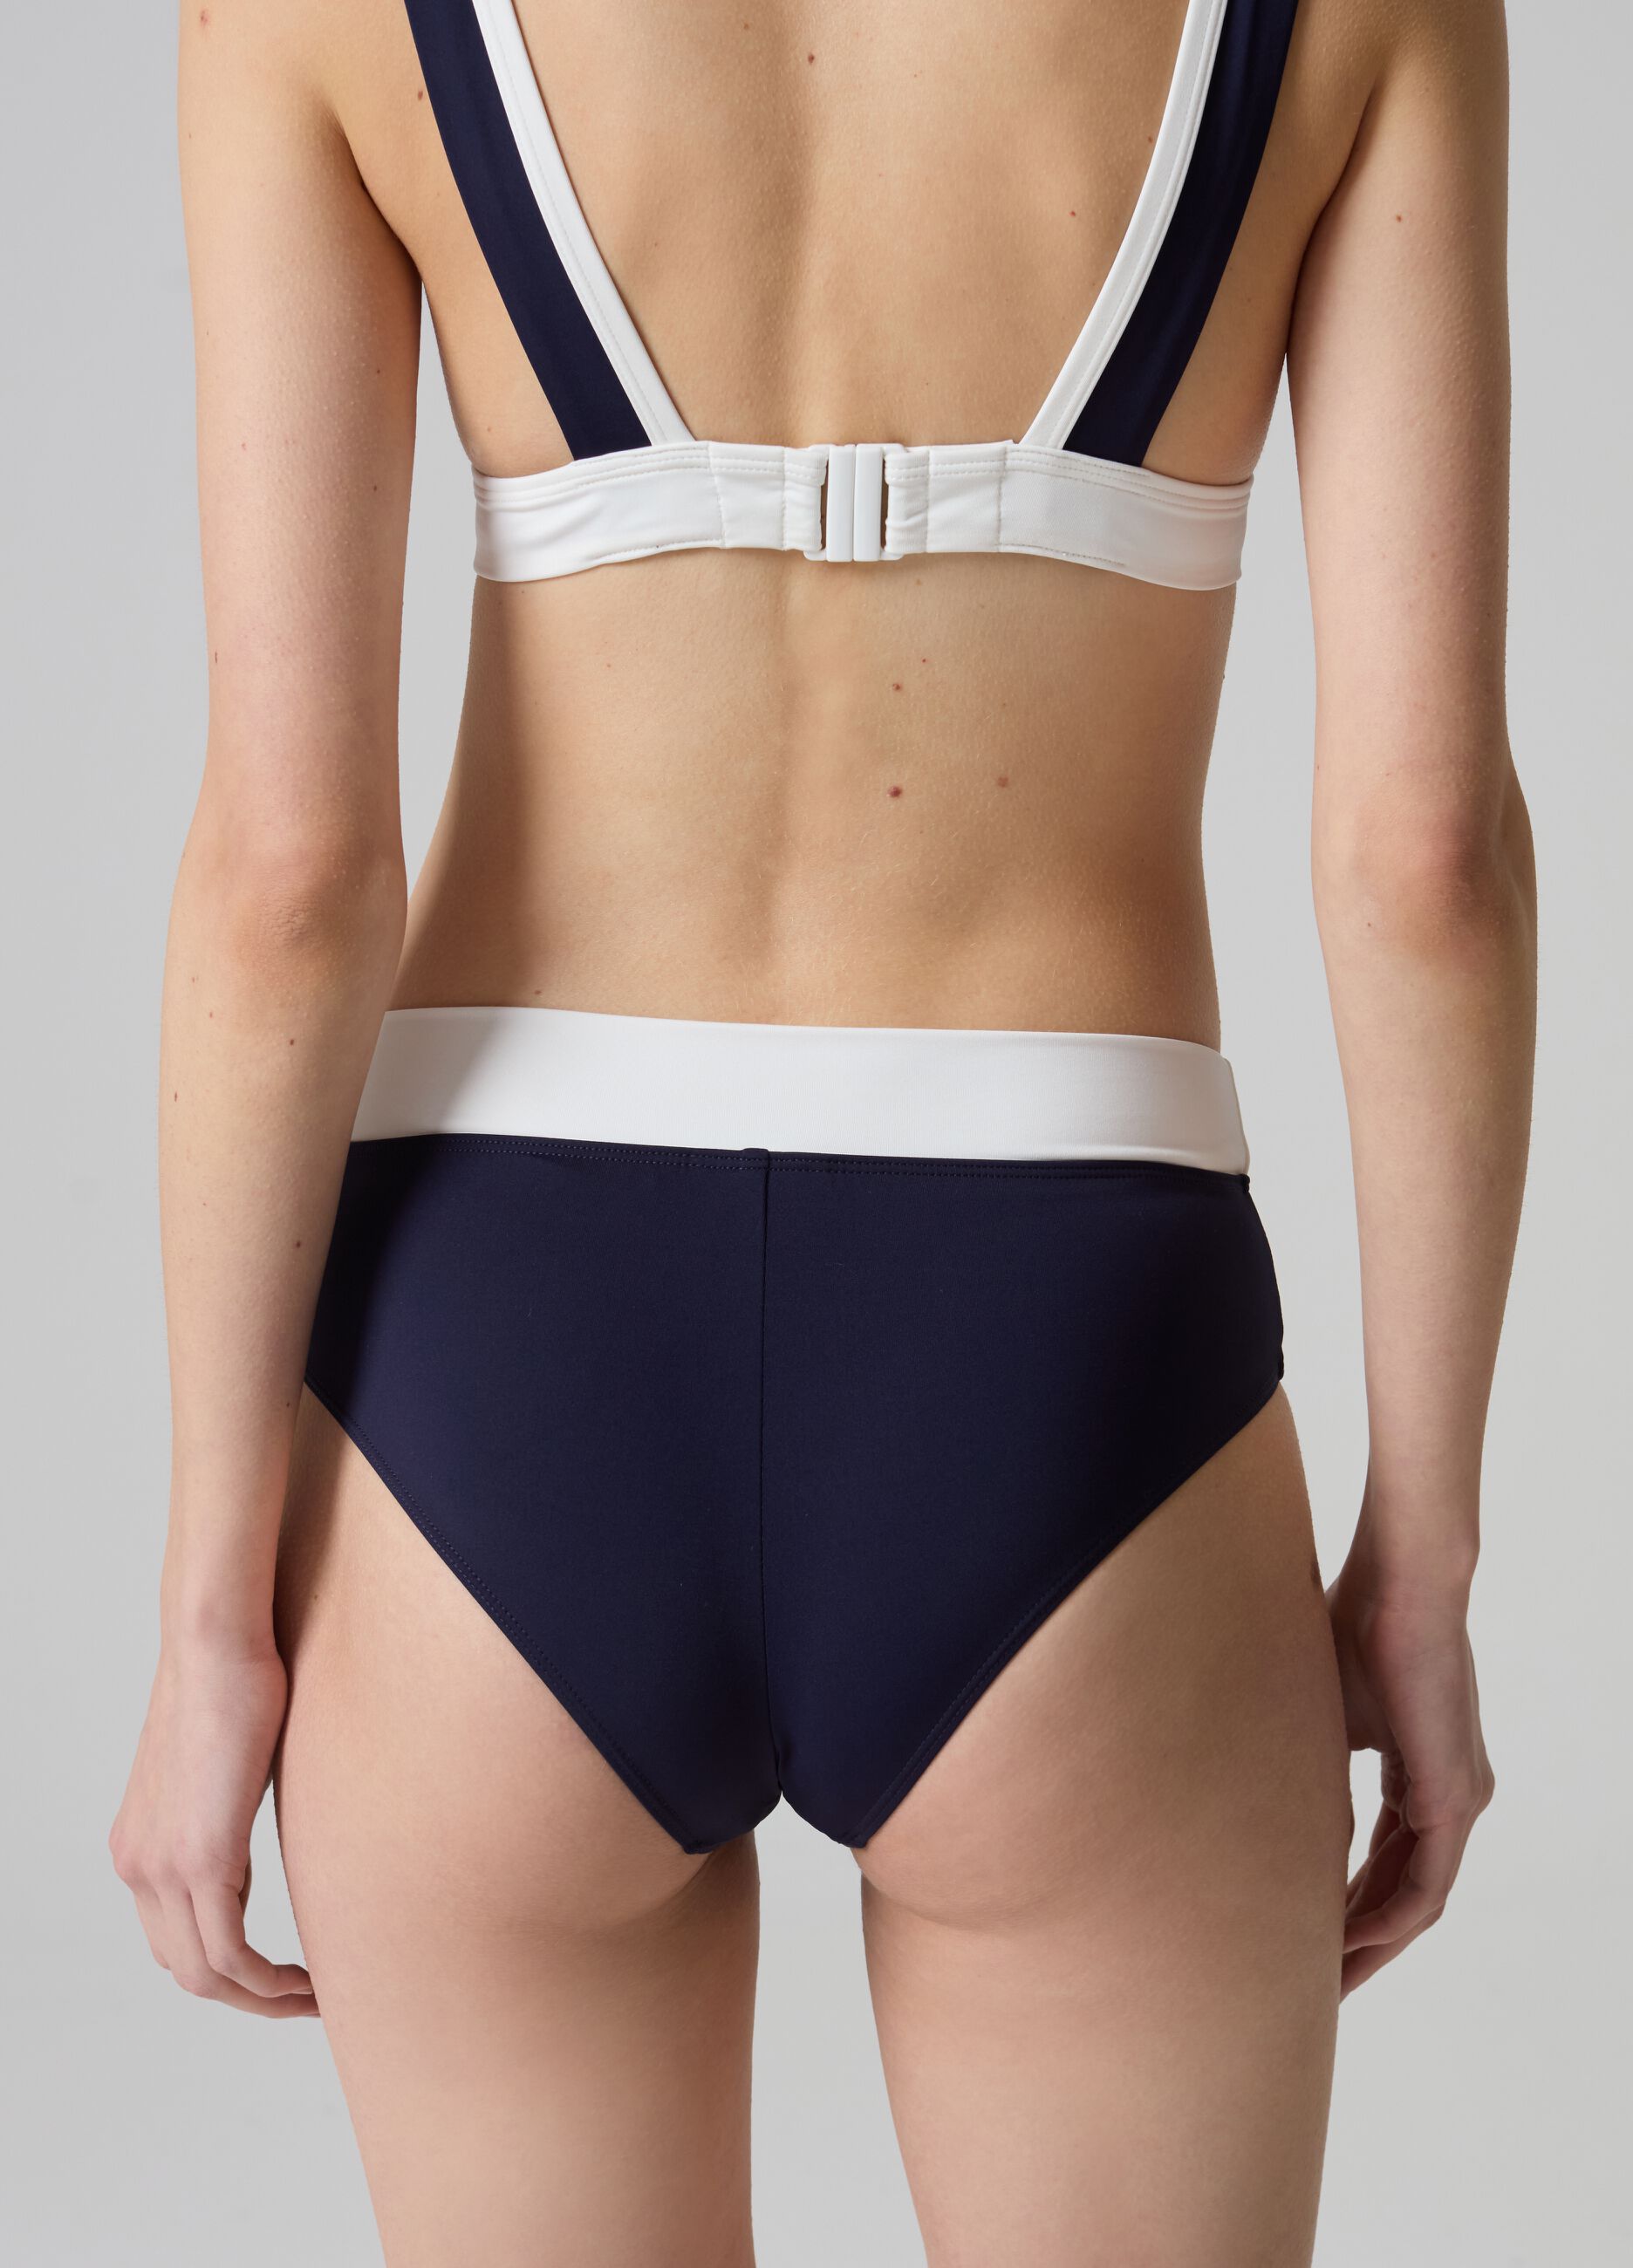 High-waist bikini bottoms with contrasting edging